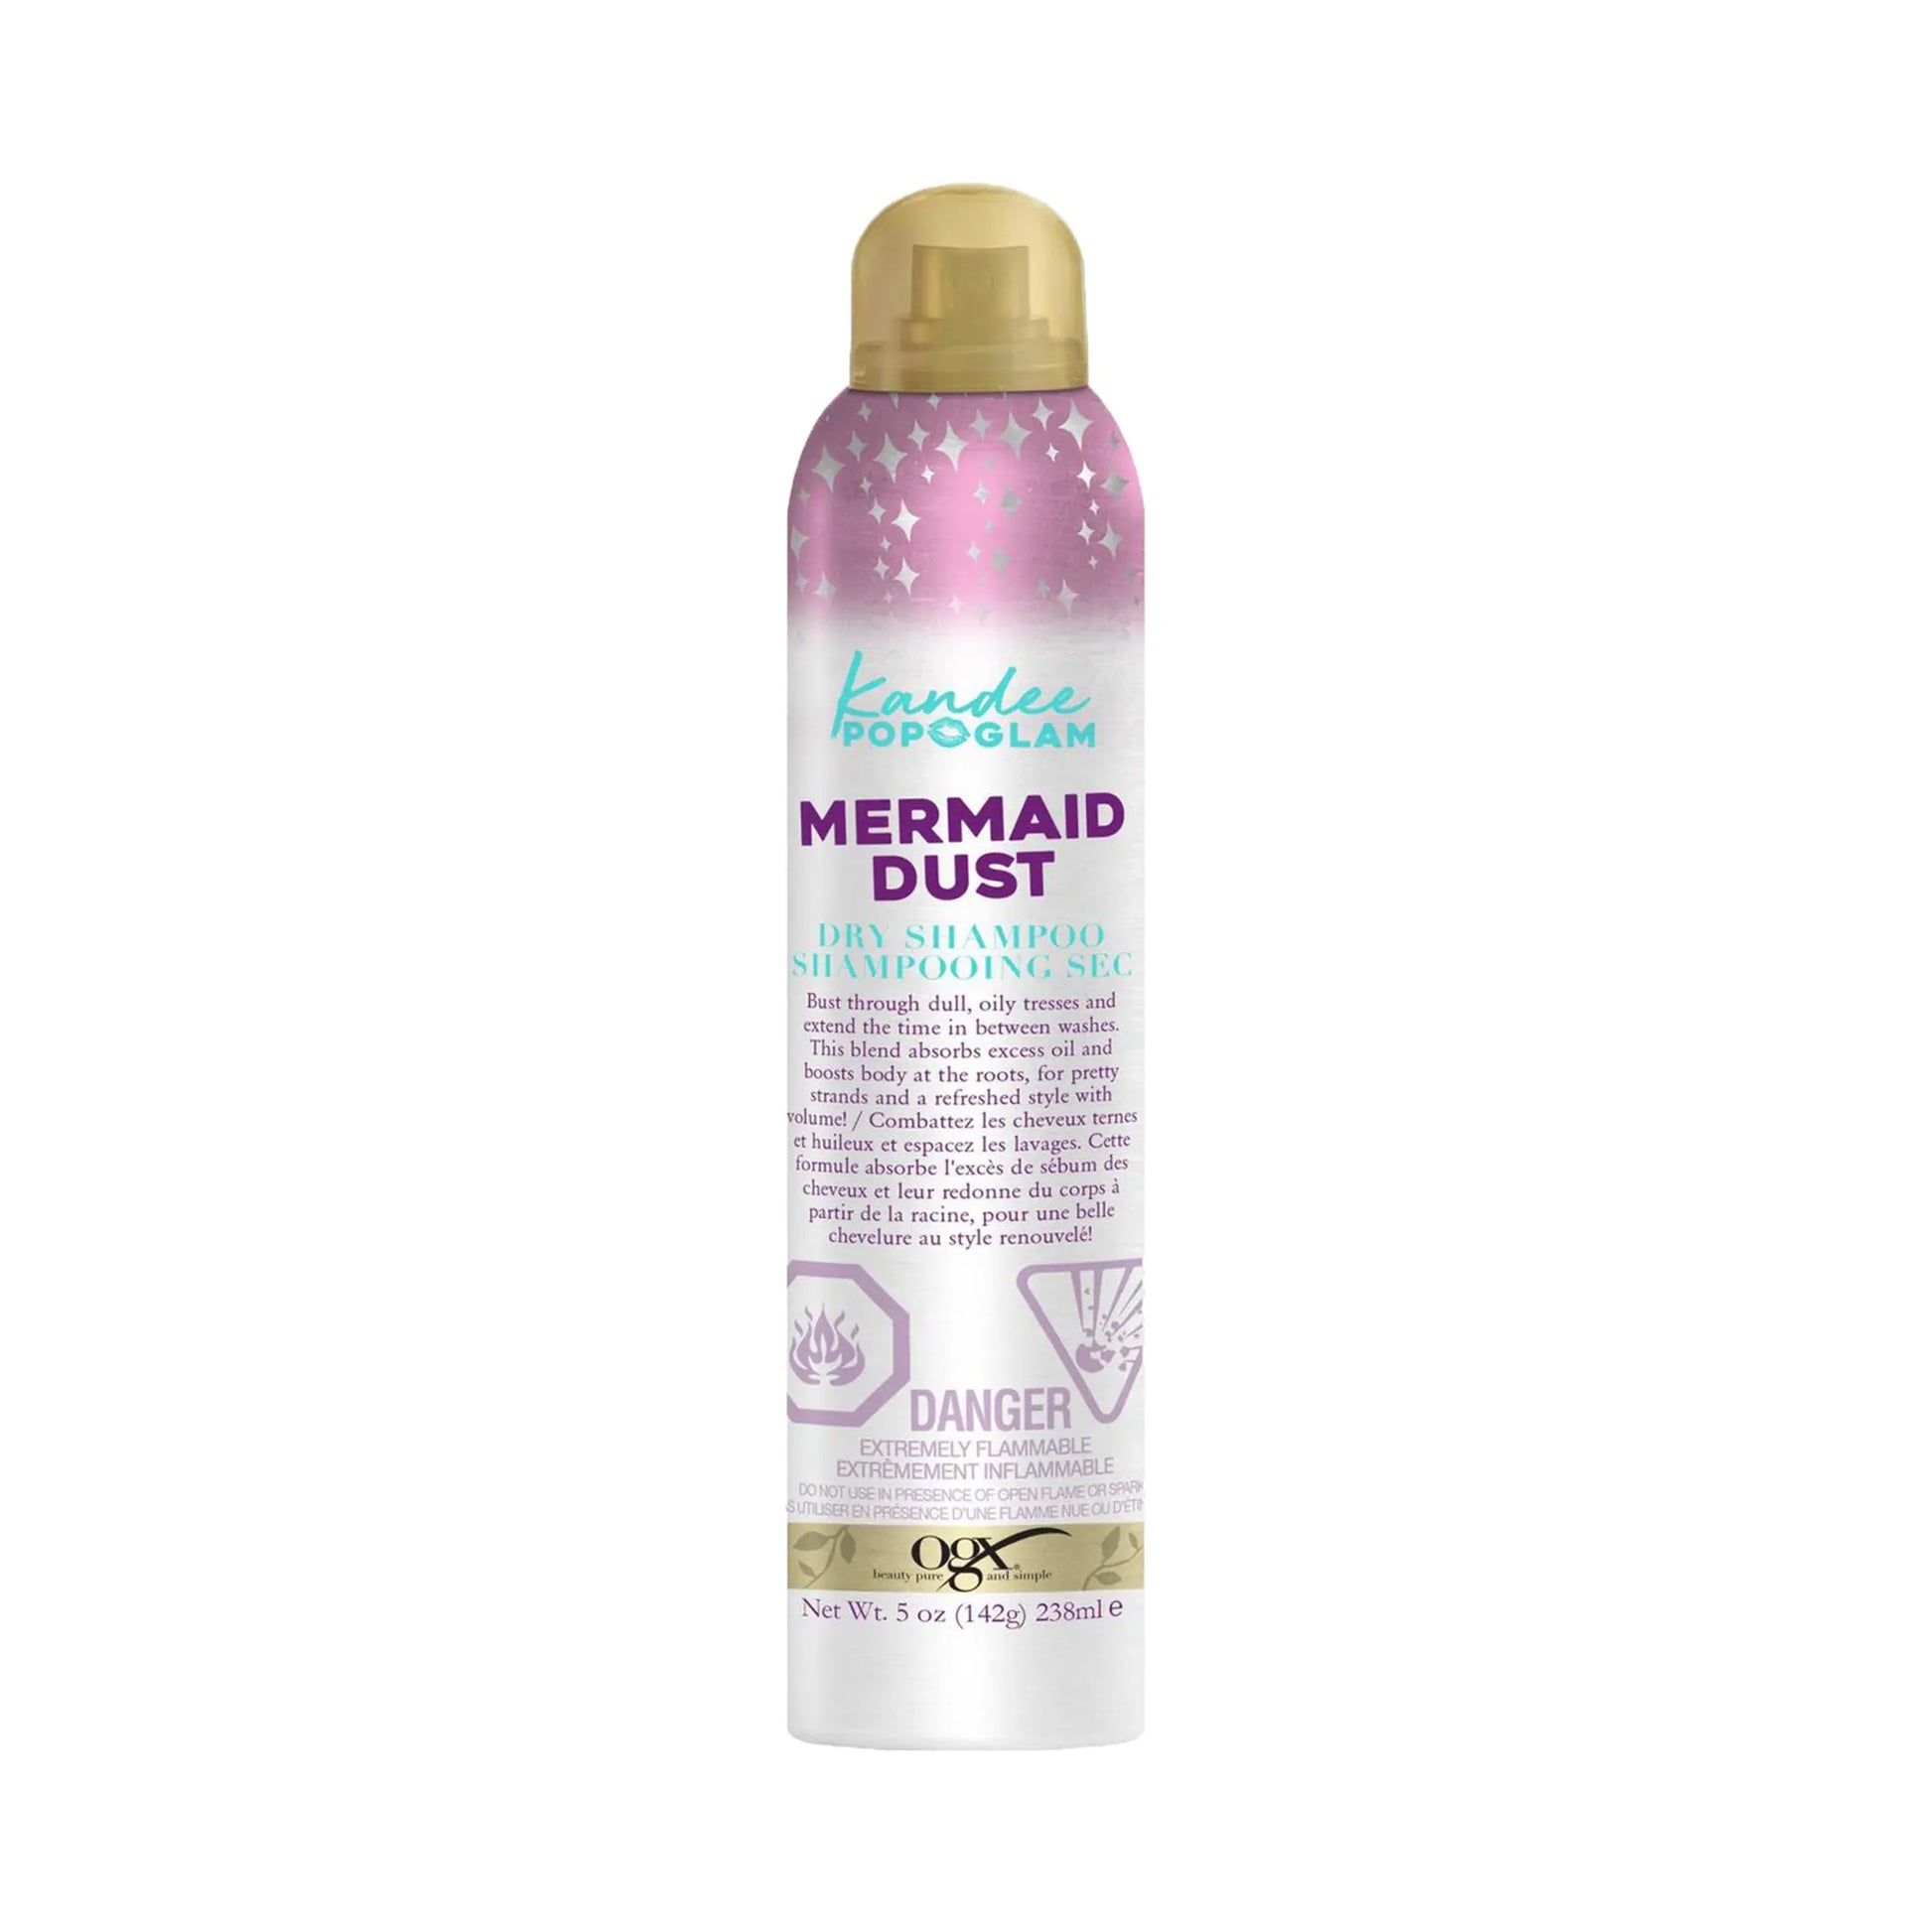 Kandee Pop  Glam Mermaid Dust Dry Shampoo Kandee Pop